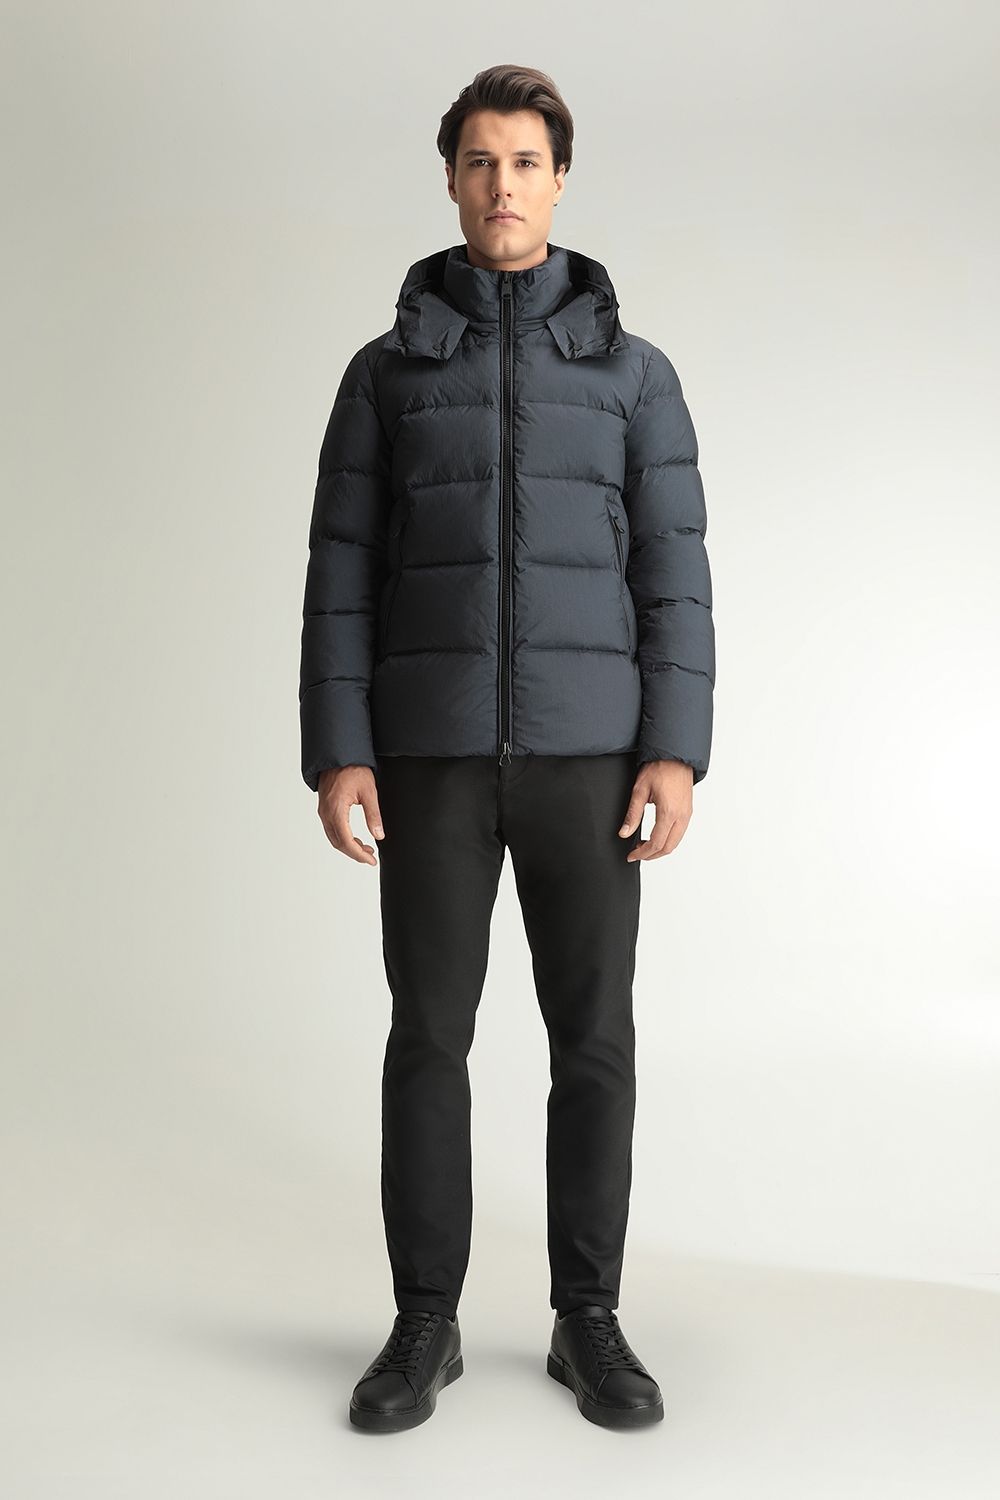 Men's jackets Hetregó  Winter Collection 2020-21